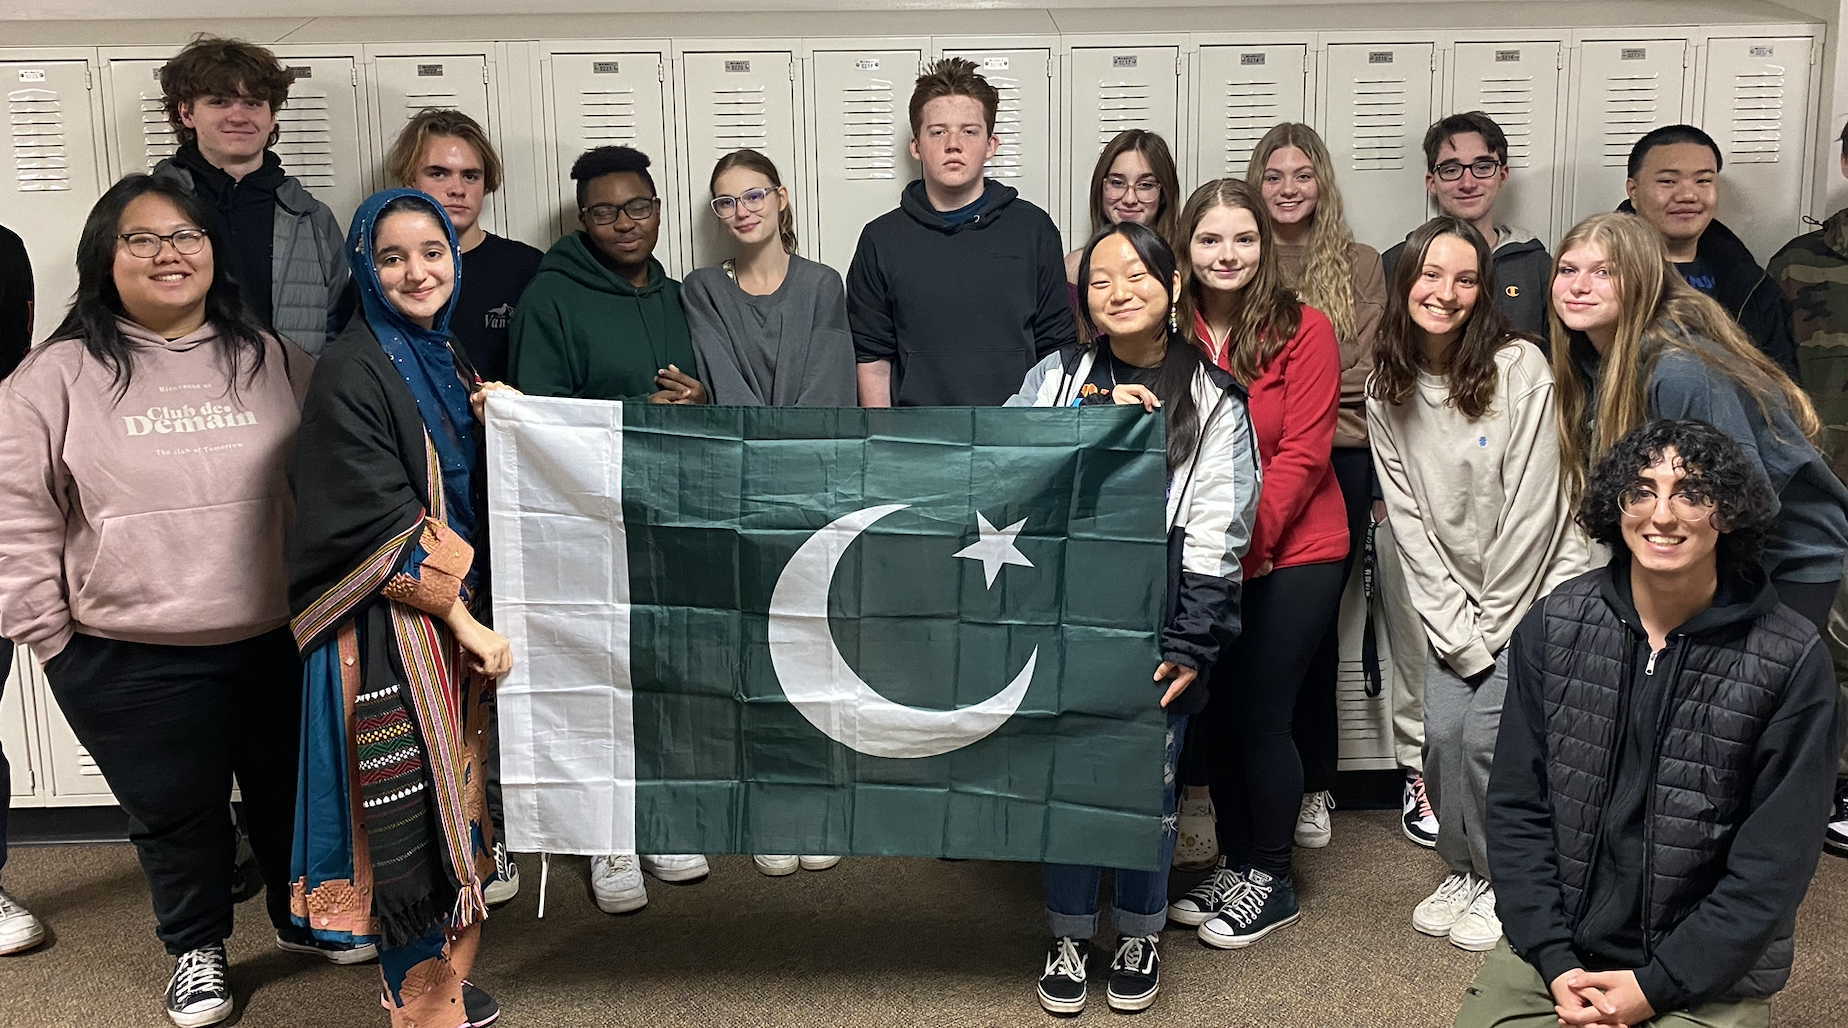 Sahar and her classmates holding the Pakistani flag.